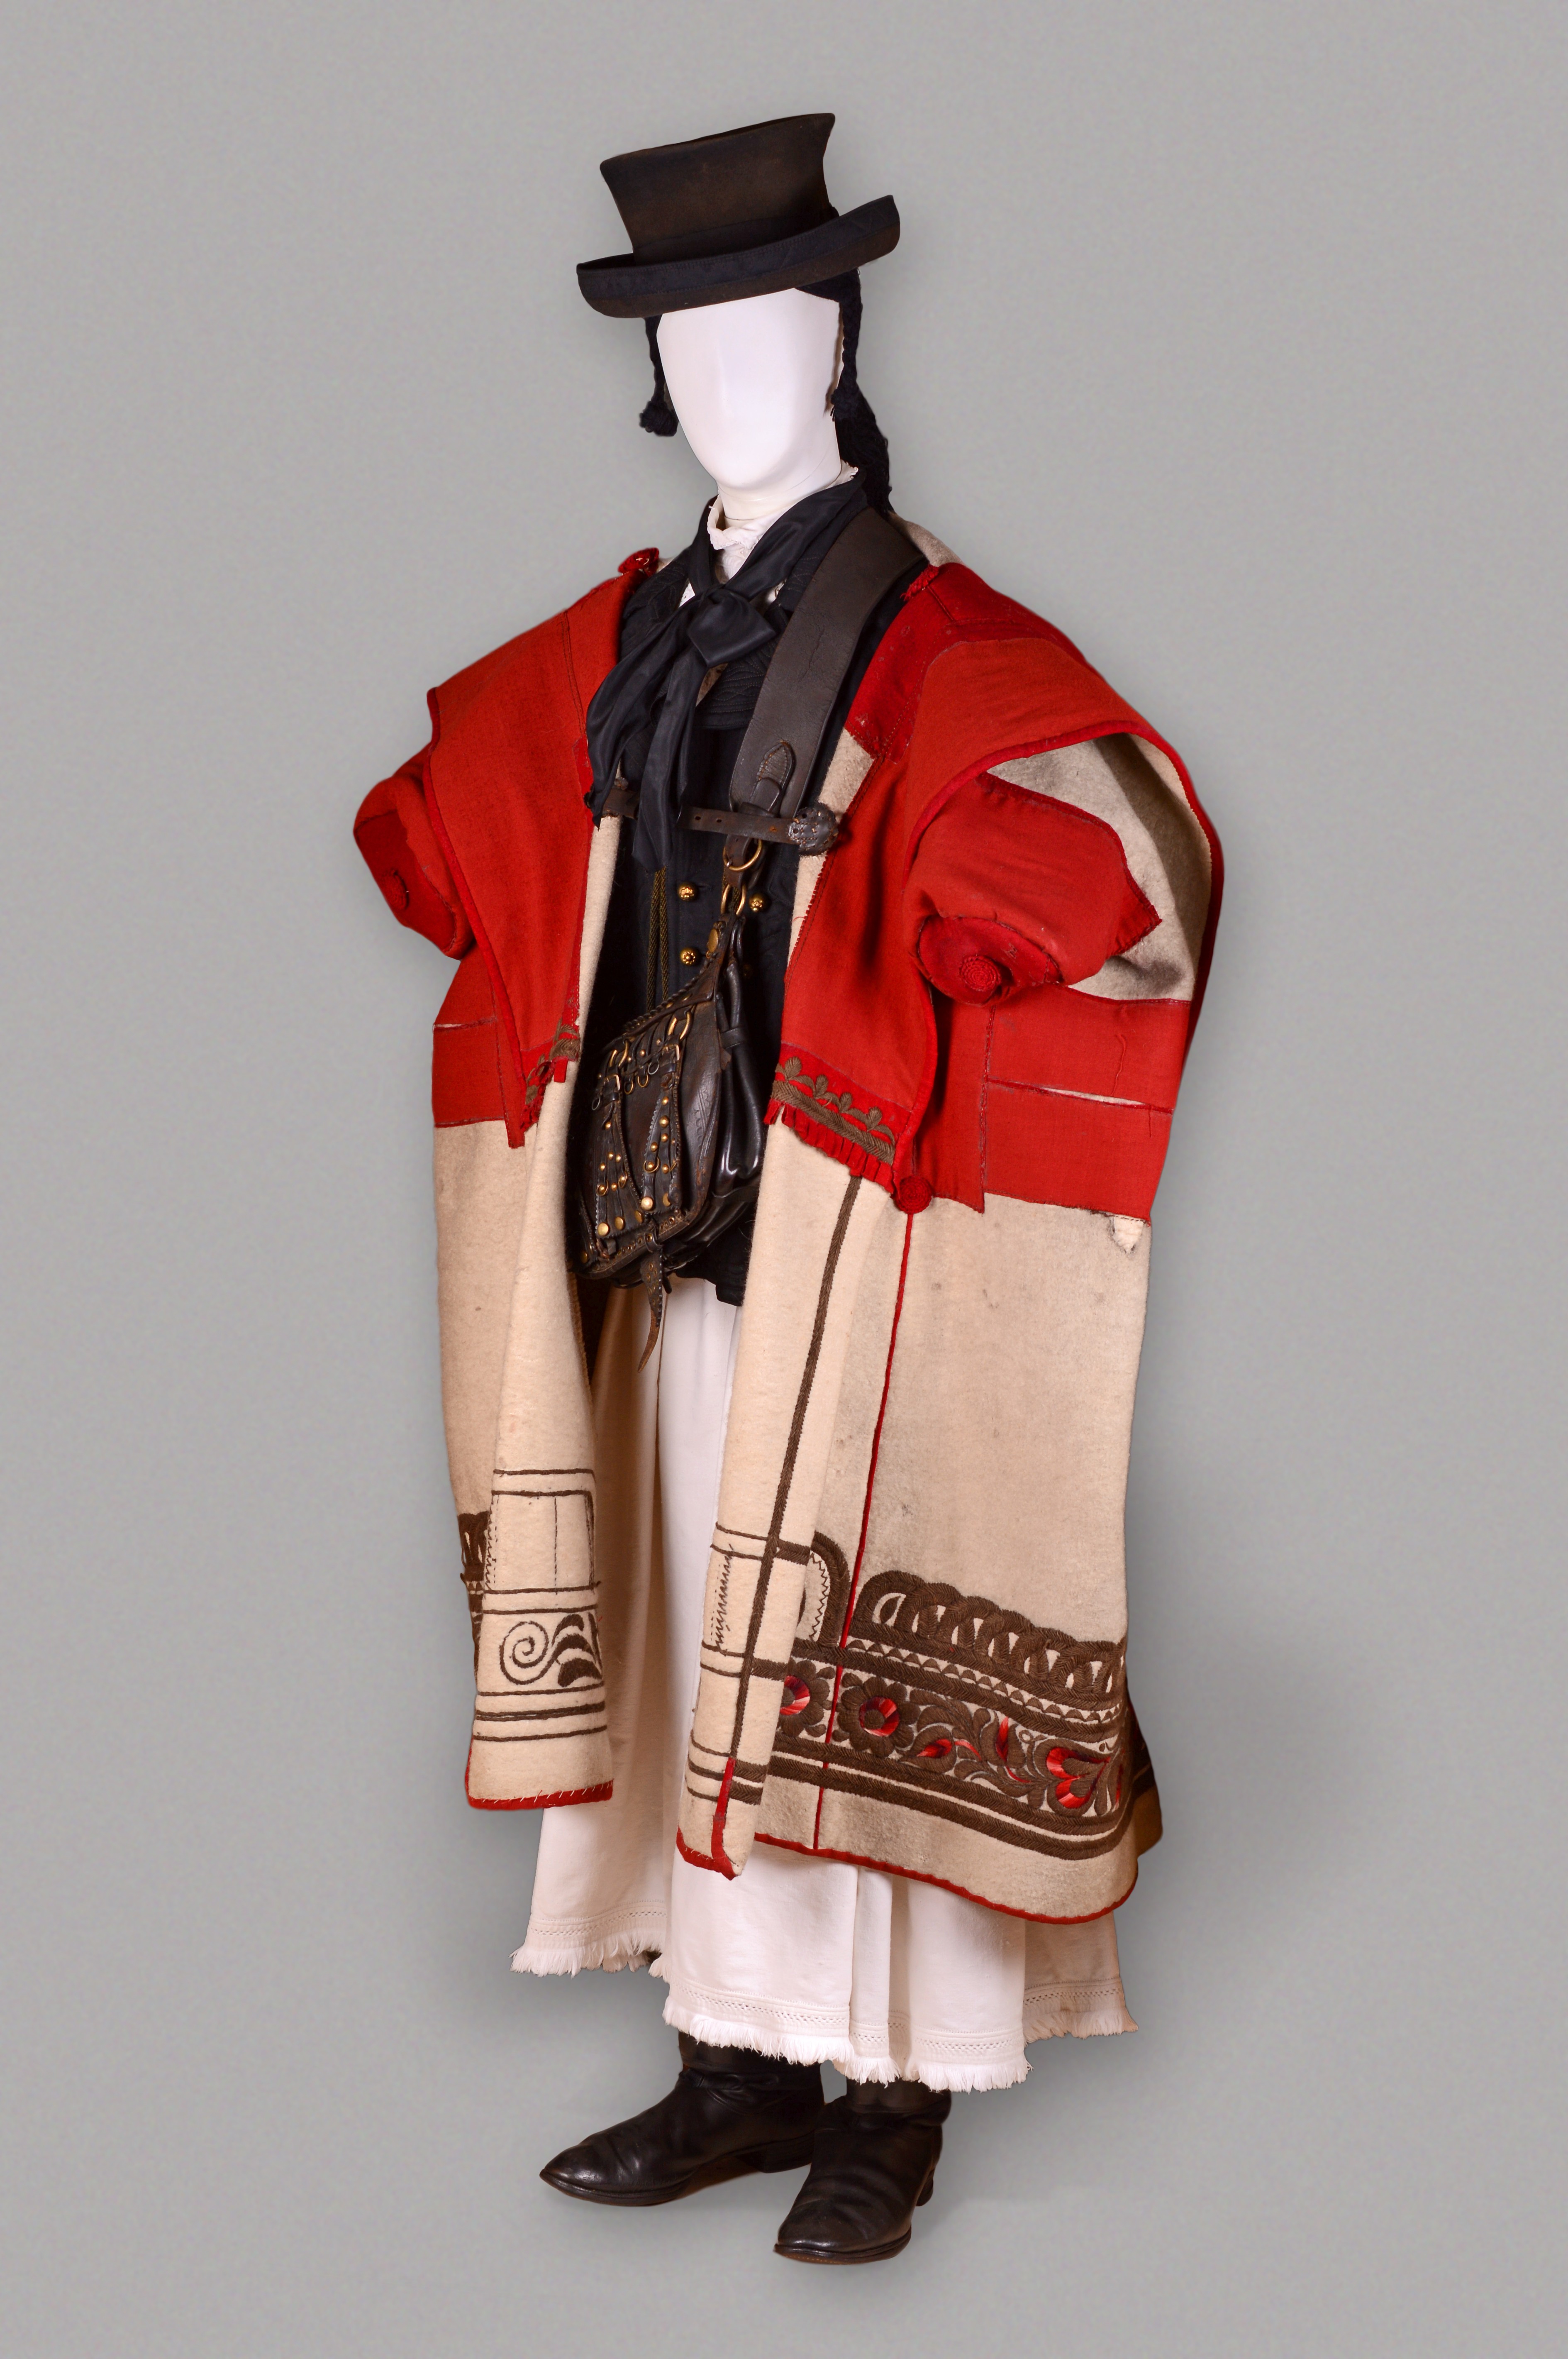 Pásztor dolmány (kabát) (Rippl-Rónai Múzeum CC BY-NC-ND)